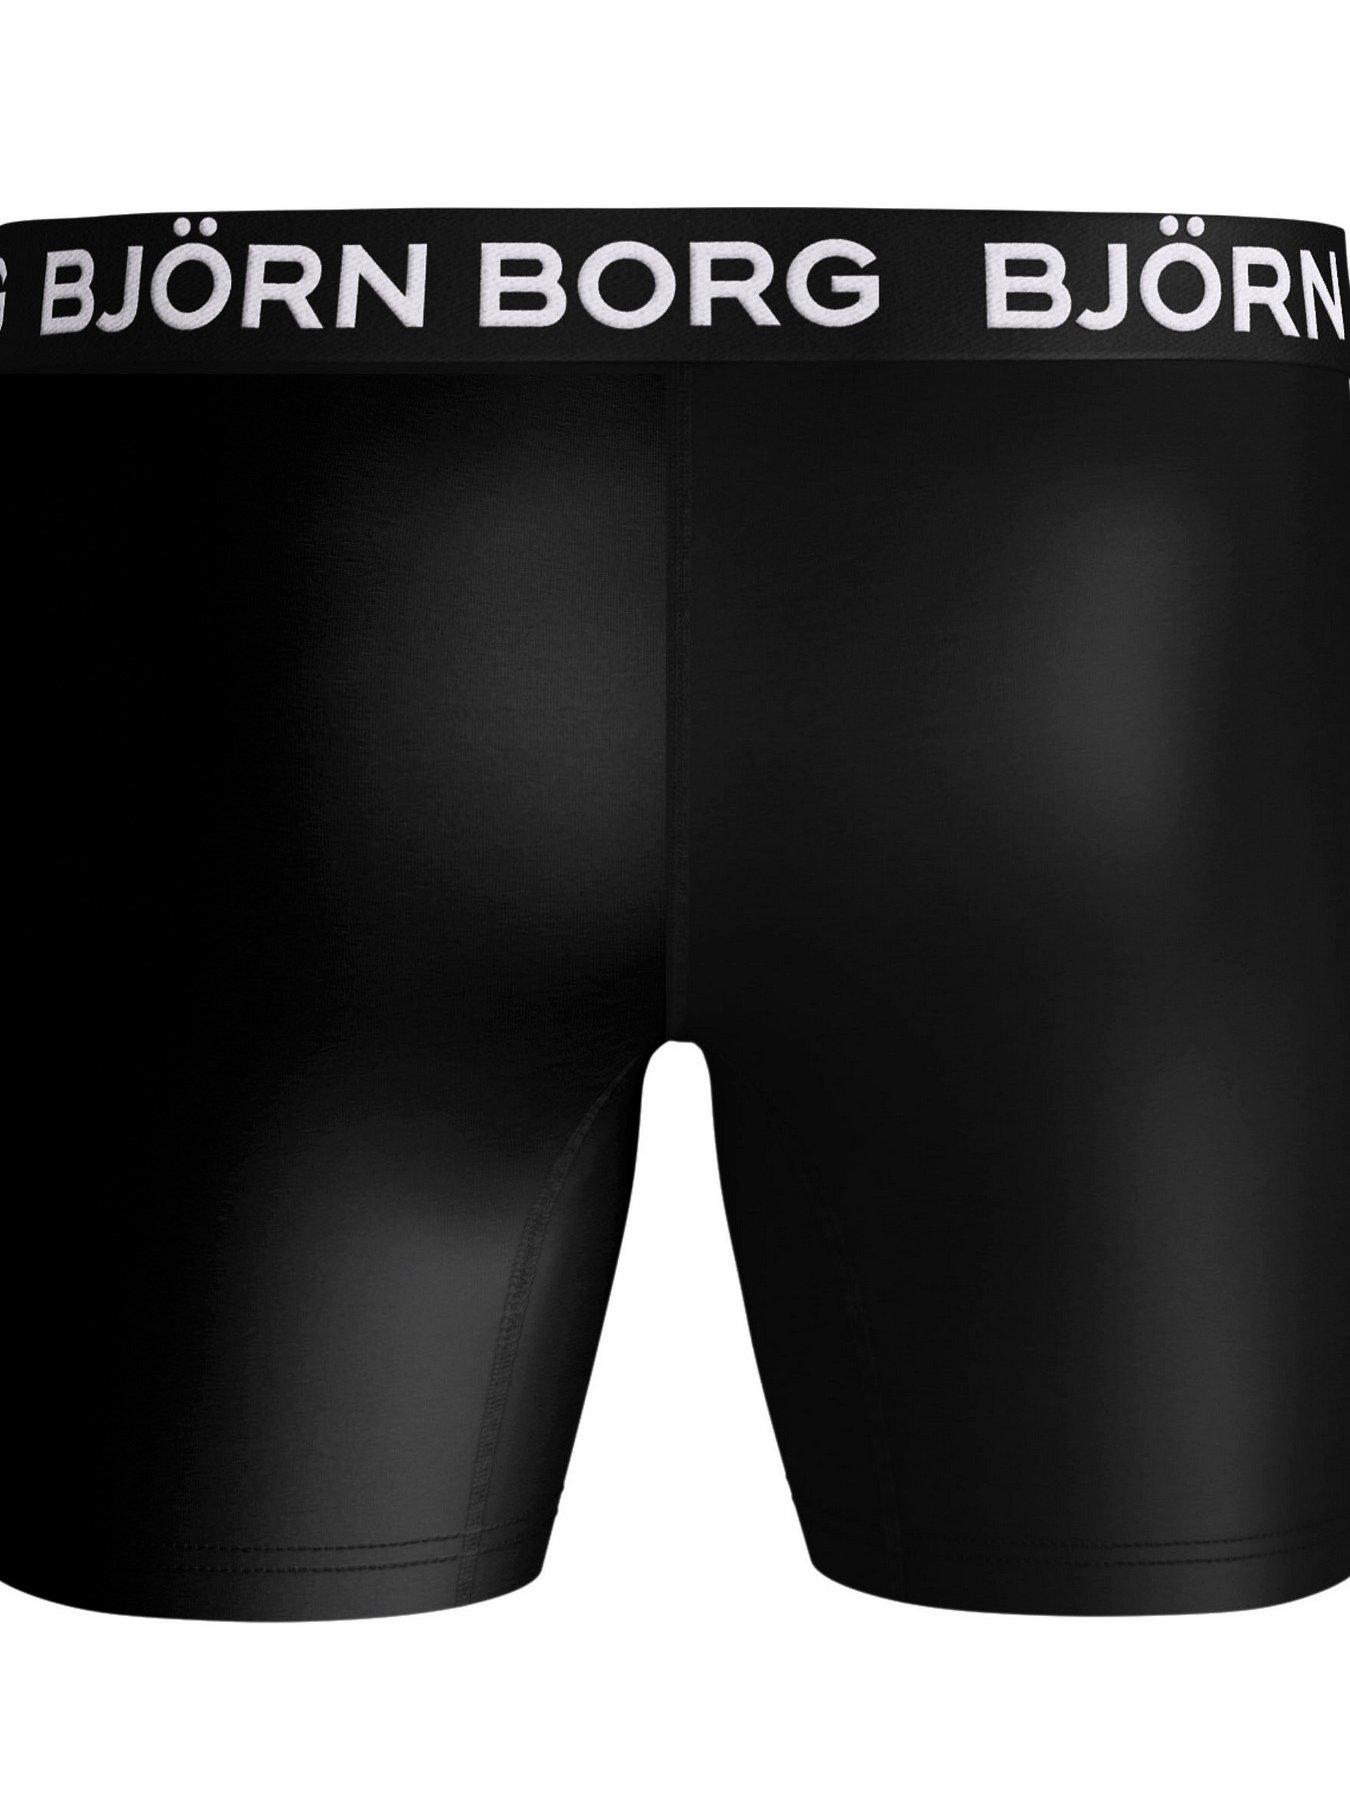 Men's Bjorn Borg Underwear UK, Save 20% on Subscription